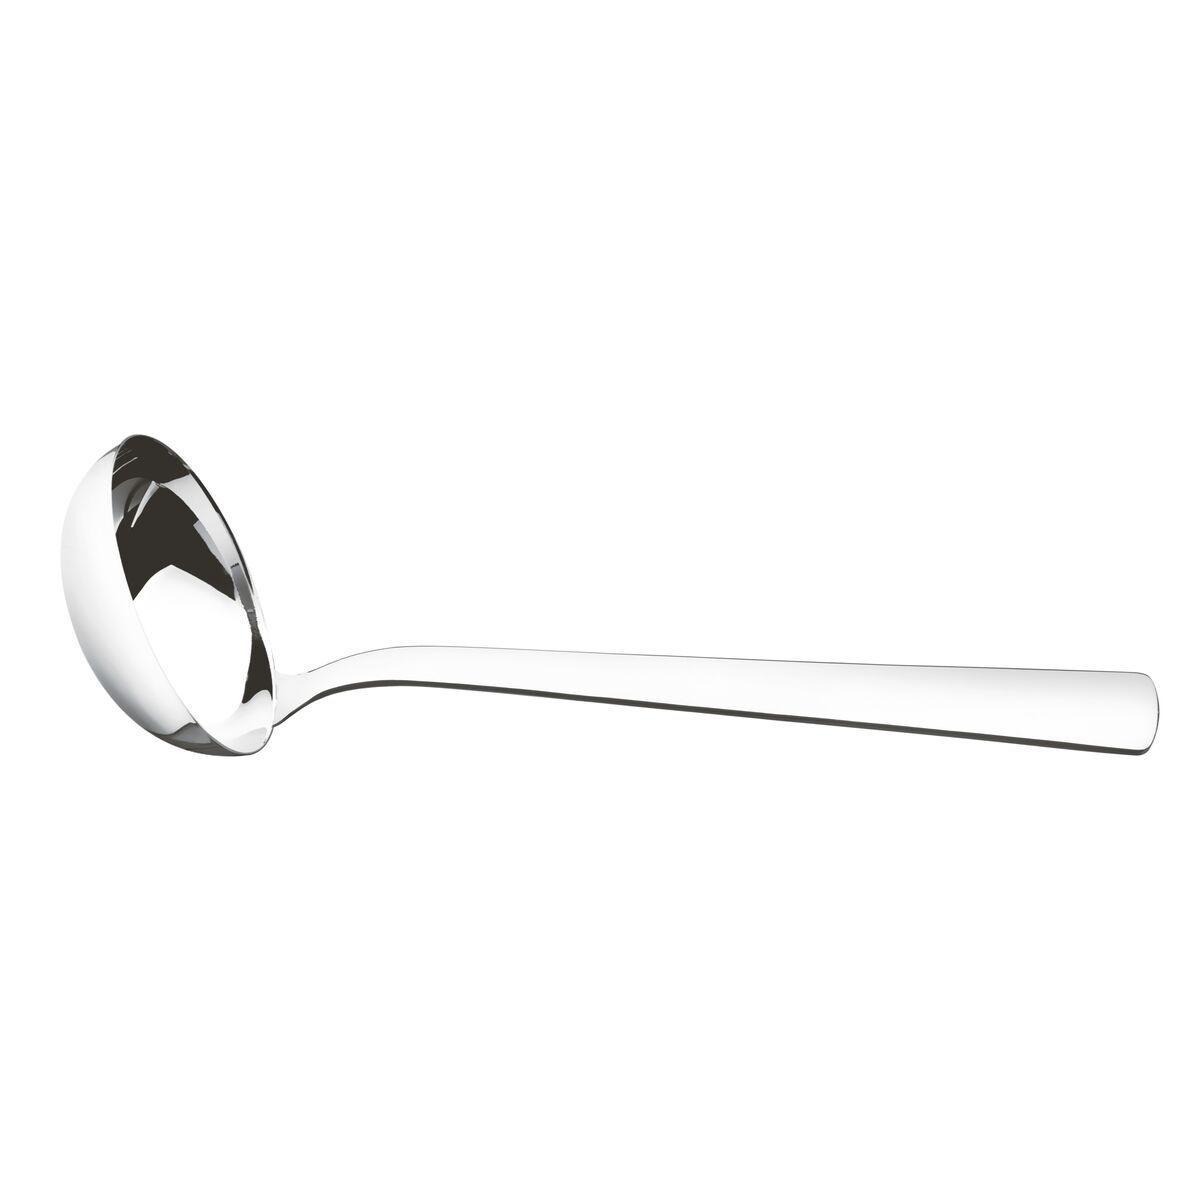 Tramontina Oslo stainless steel ladle